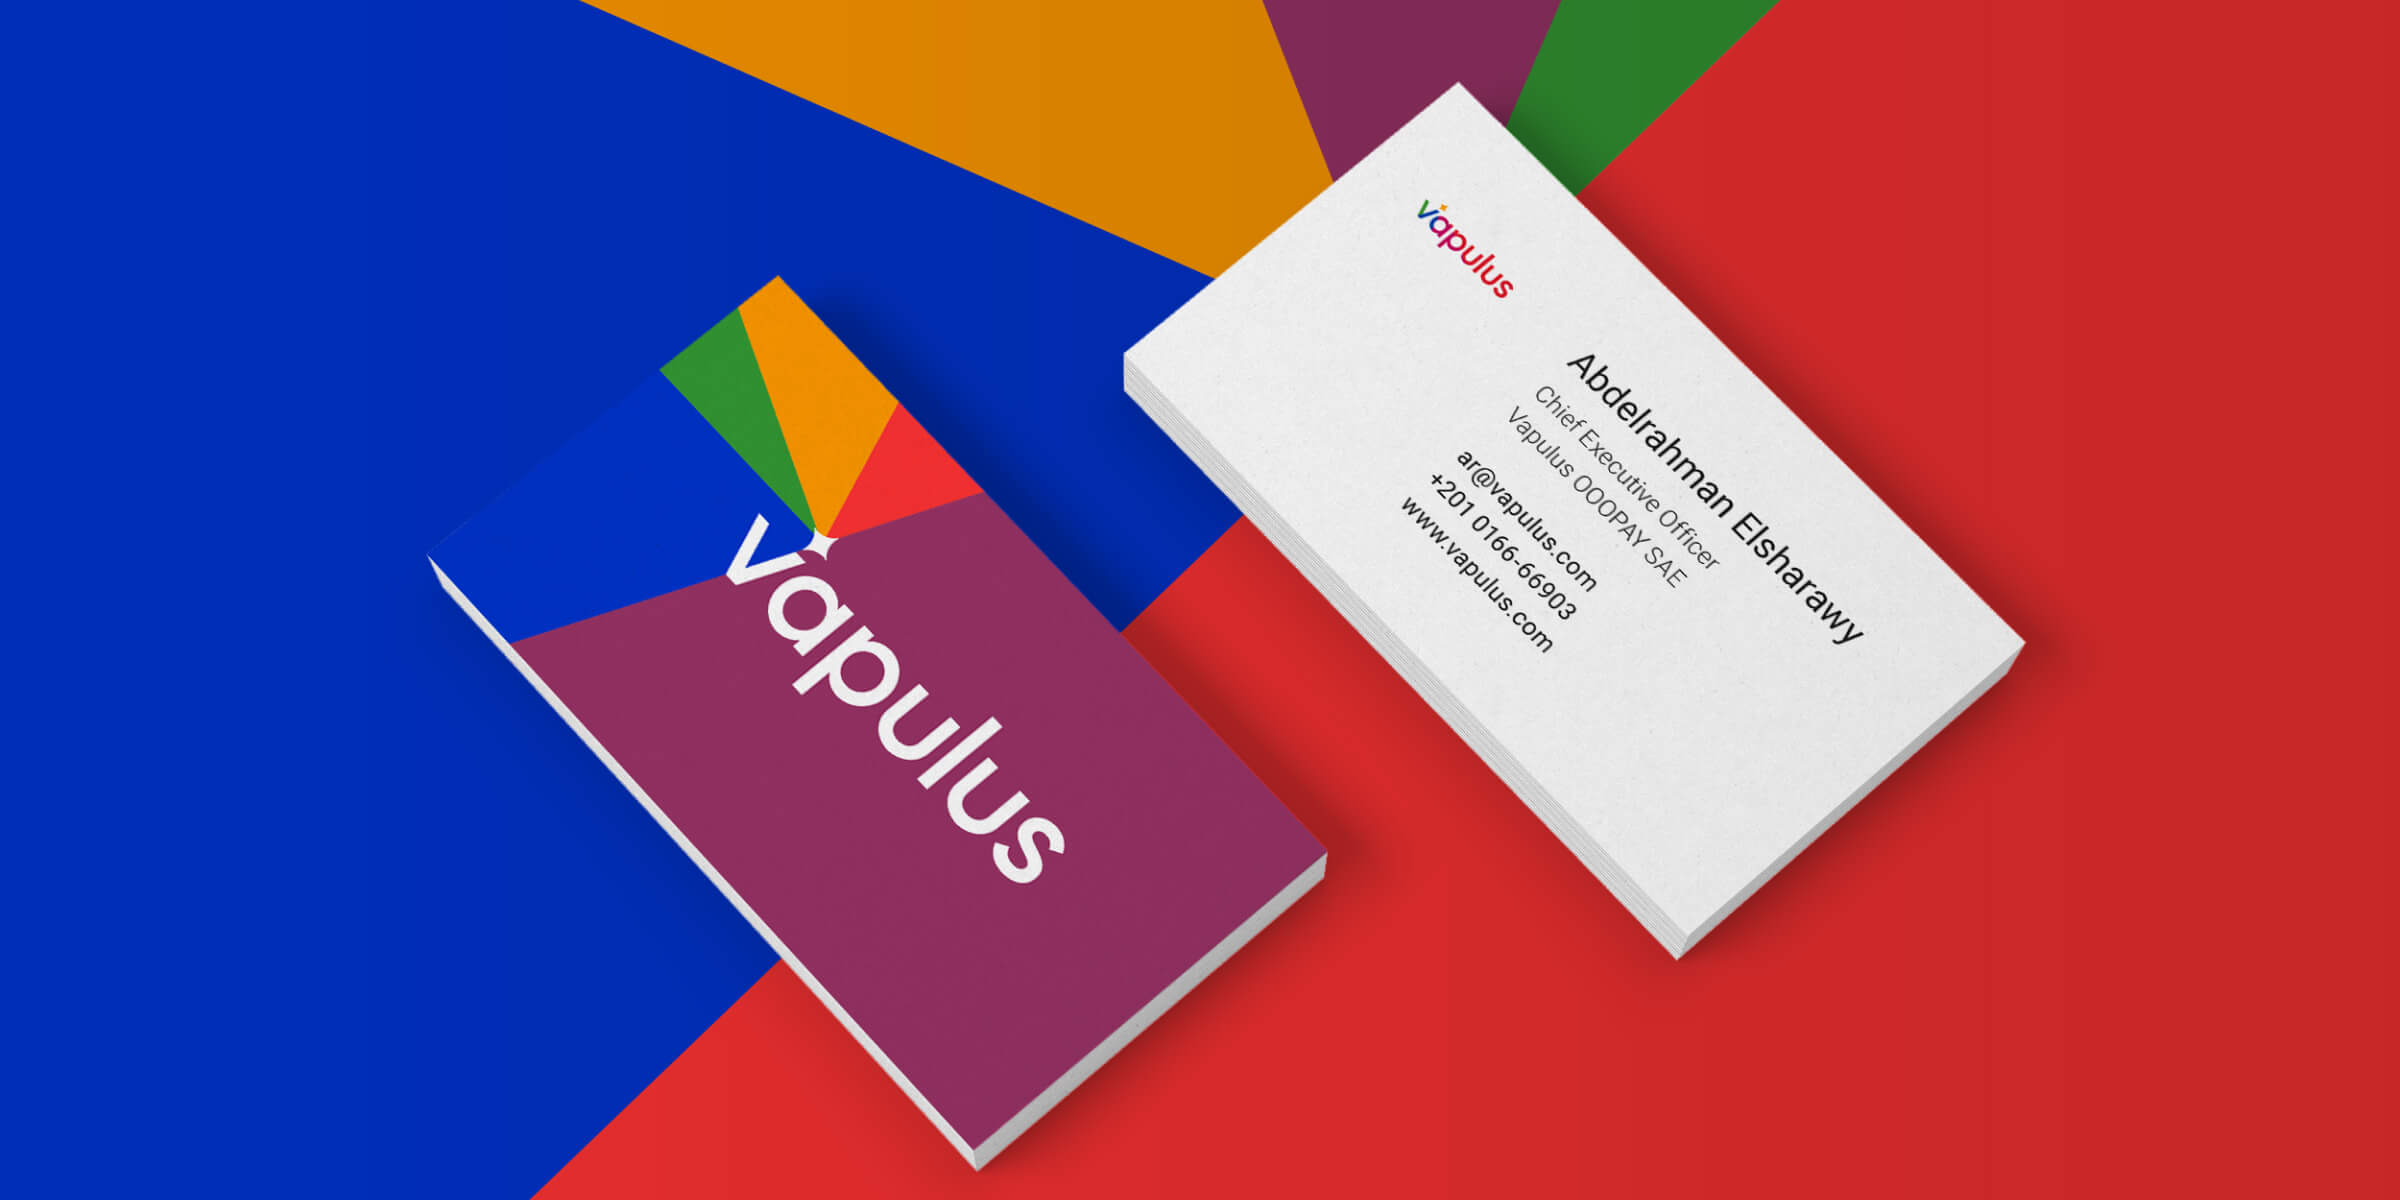 vapulus brand design image 2